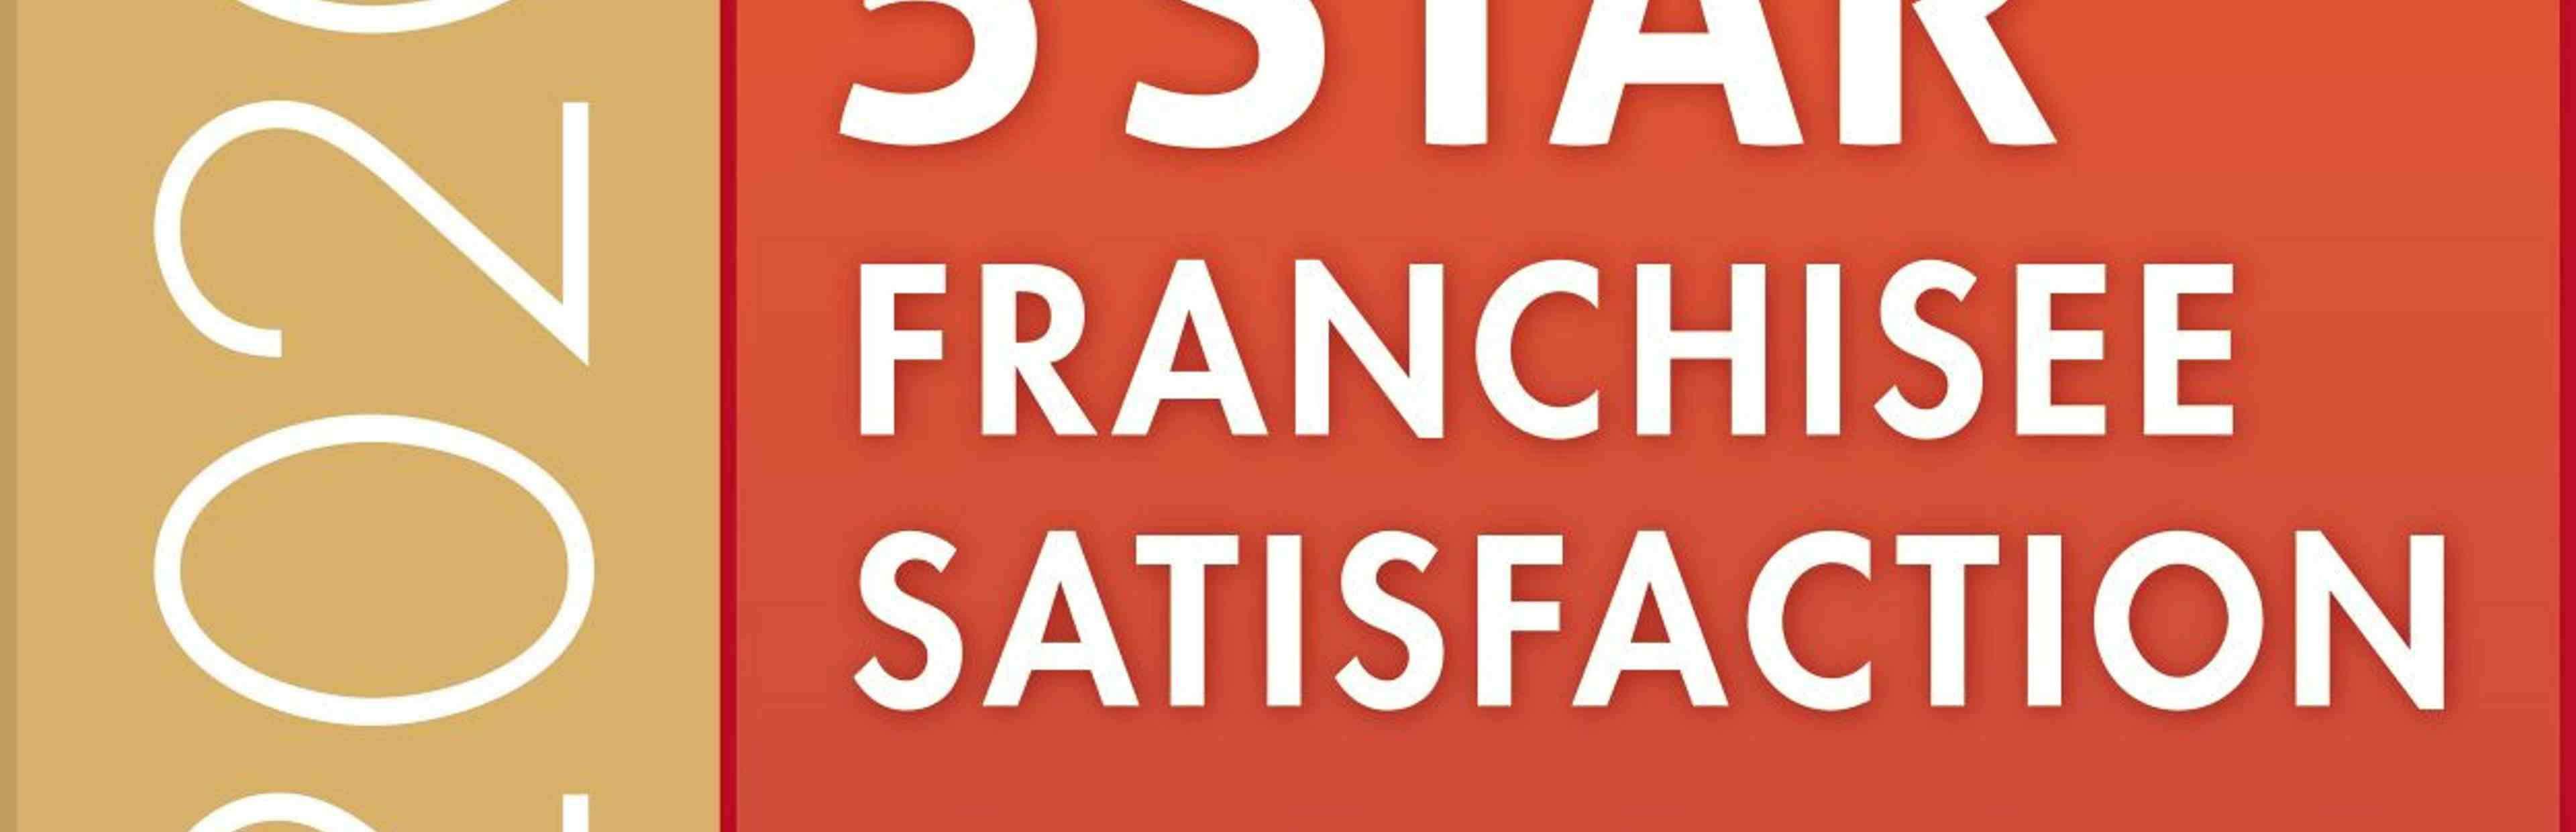 5 star franchise satisfaction